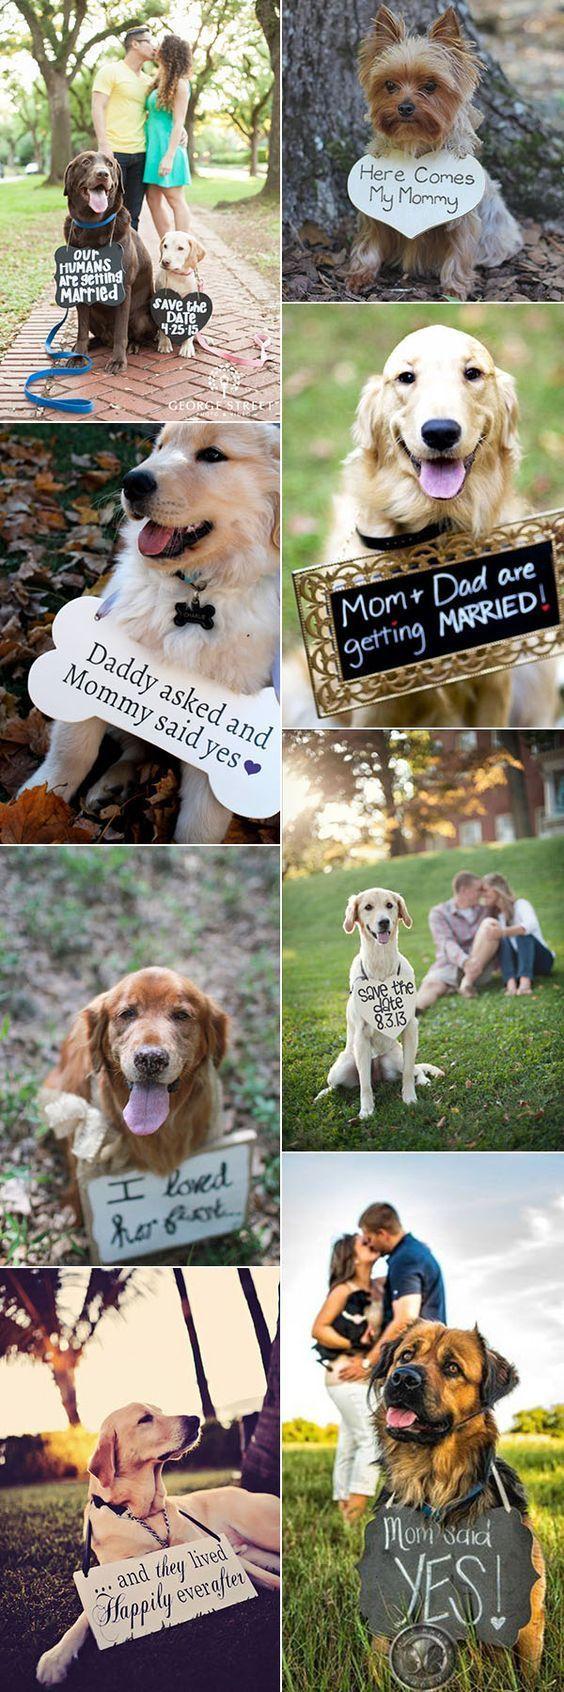 Wedding - The Best 30 Days Dog's Brain Training - Create Obedient Pet